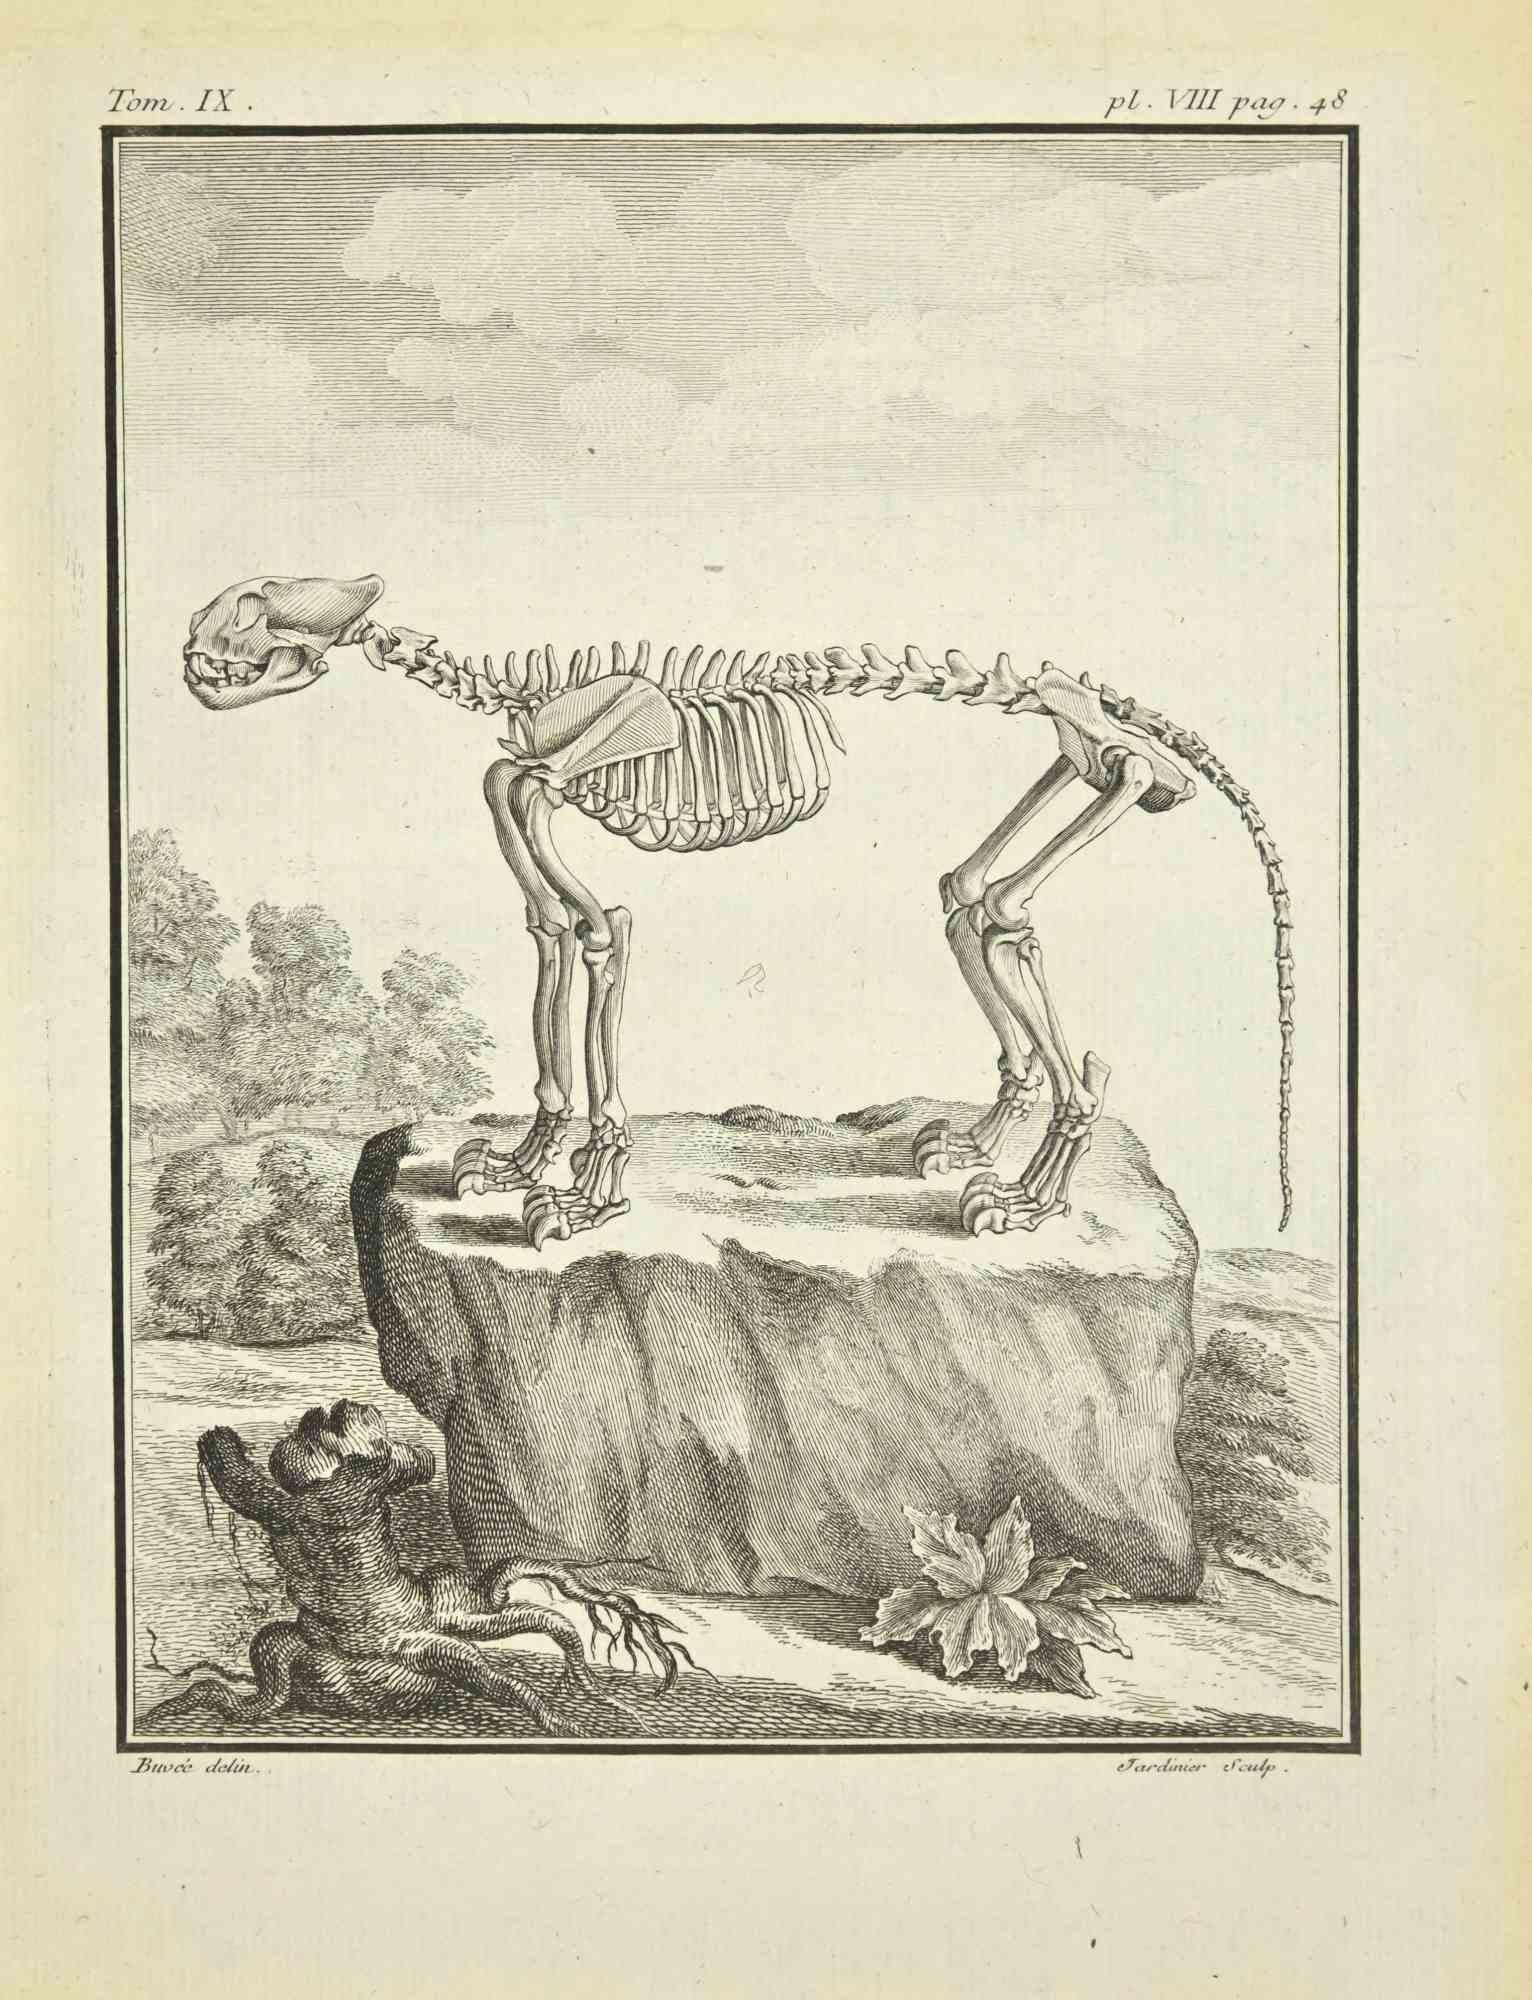 The Skeleton - Etching by Claude Jardinier - 1771